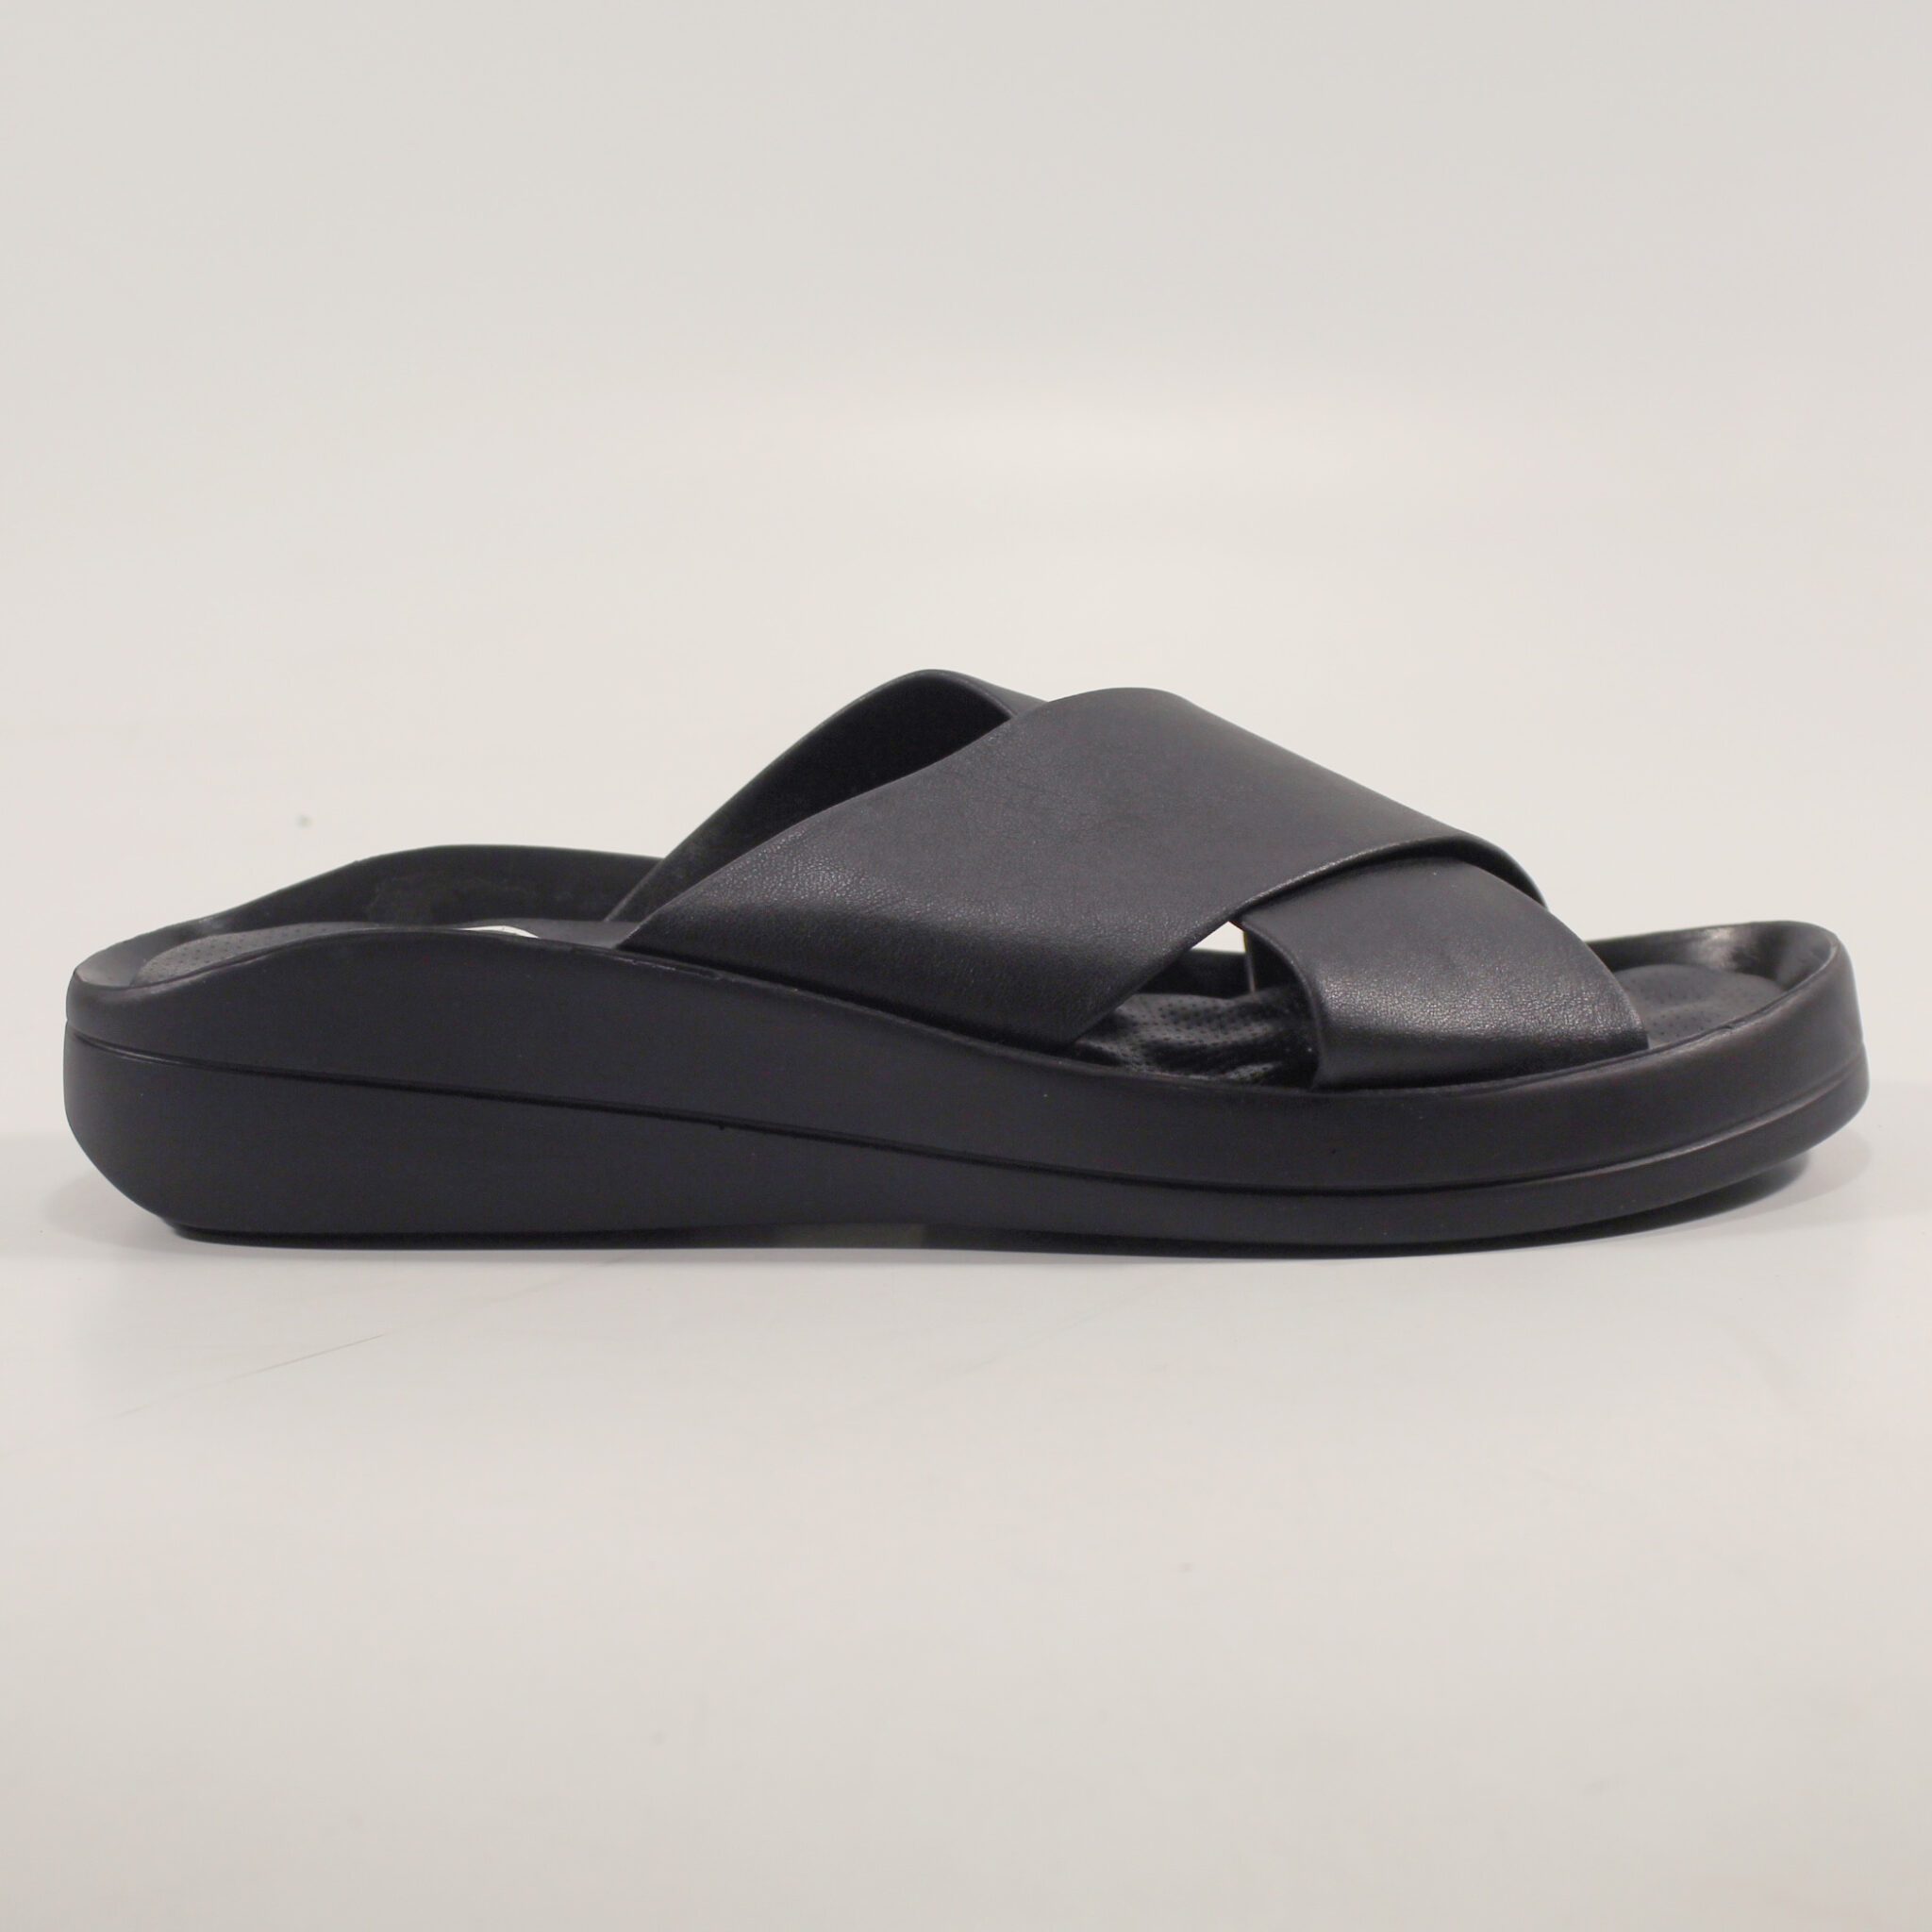 SandM leather slippers - Bestshoes